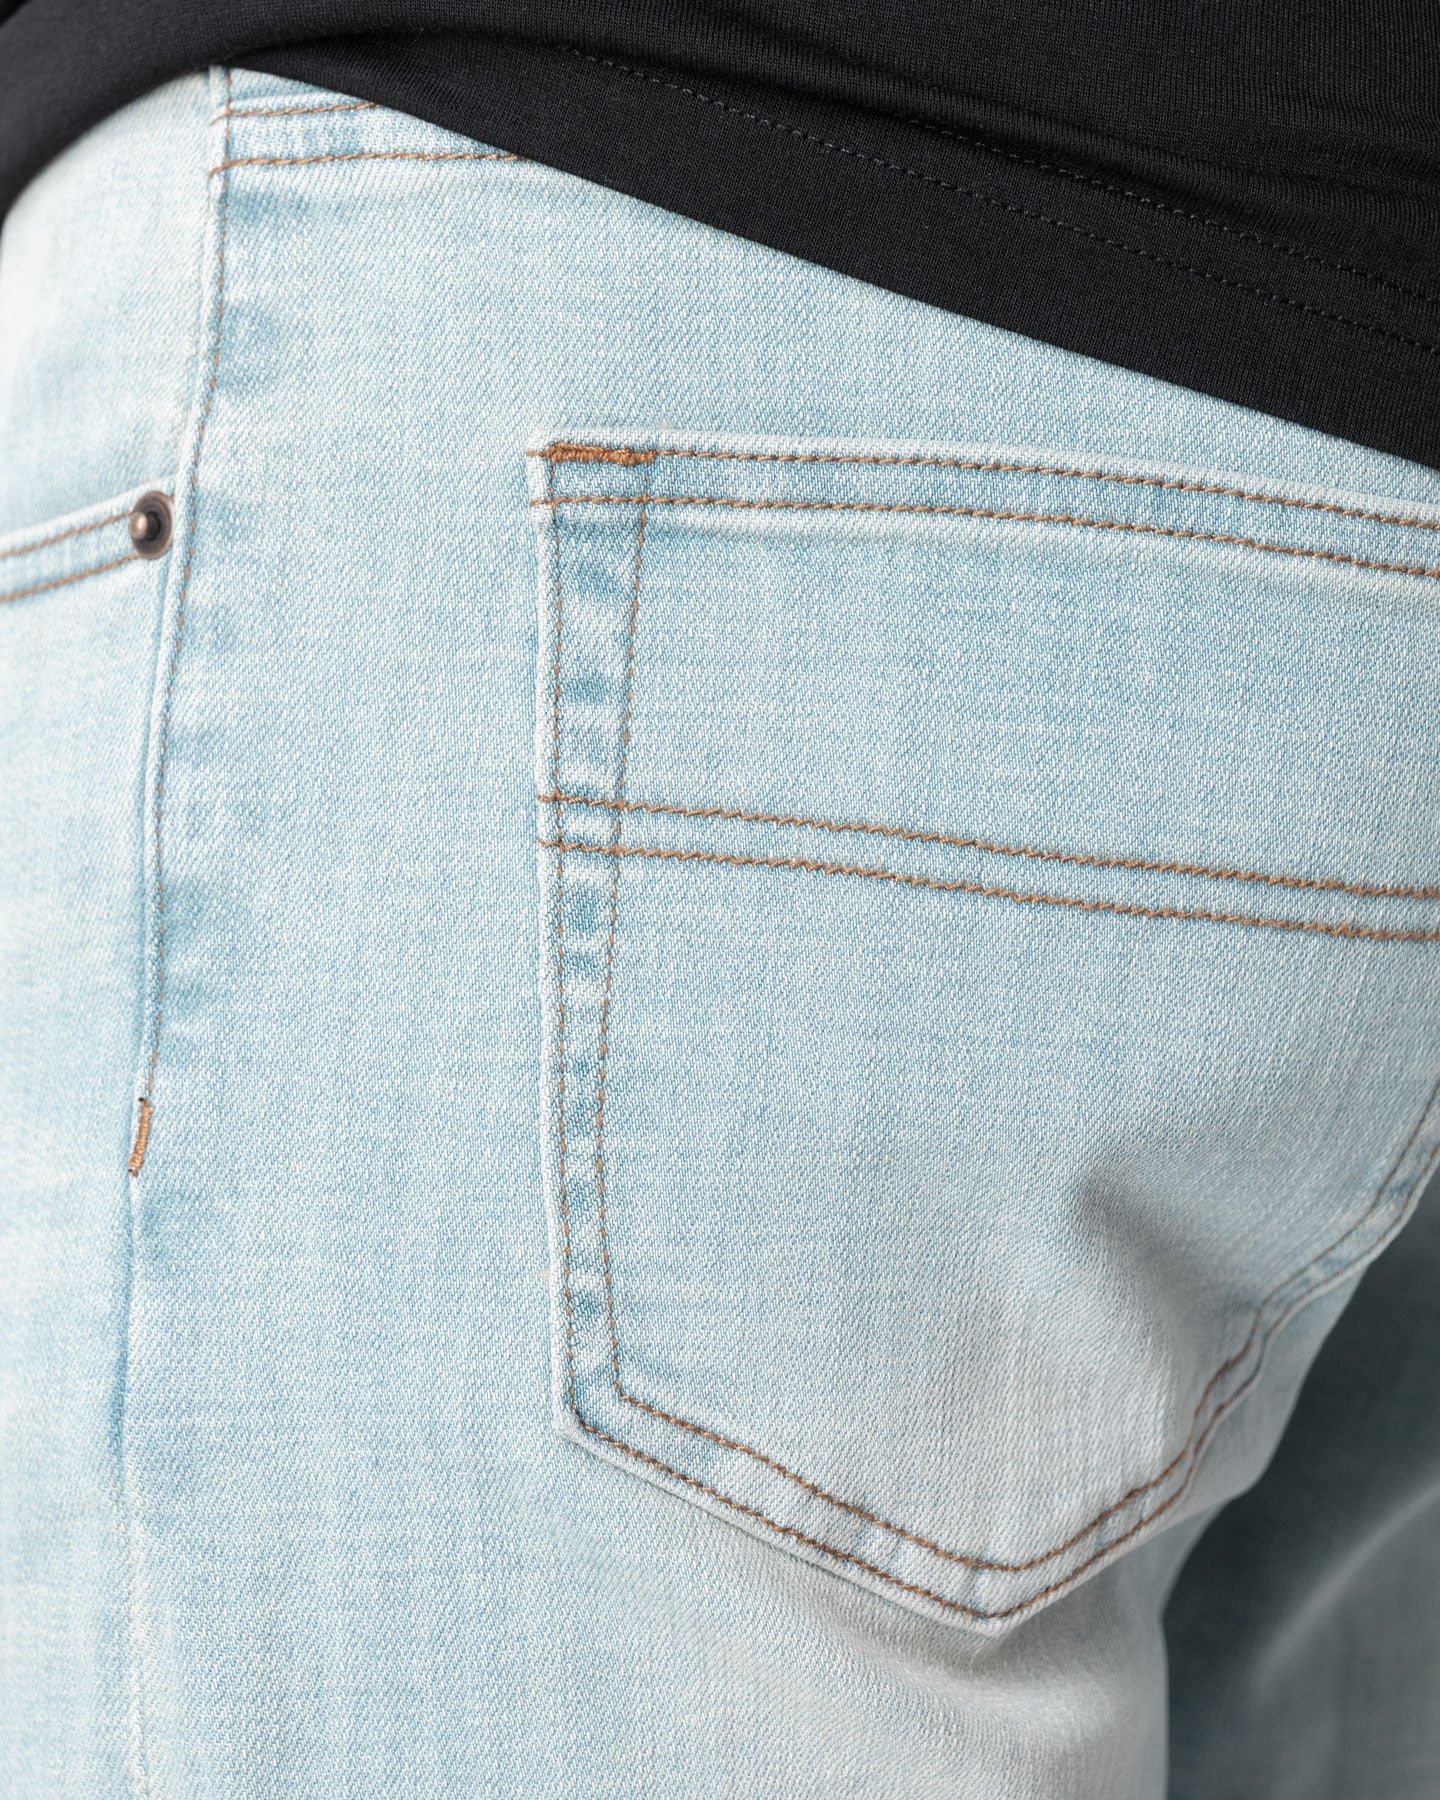 Built-In Flex Straight Light-Wash Jeans For Boys